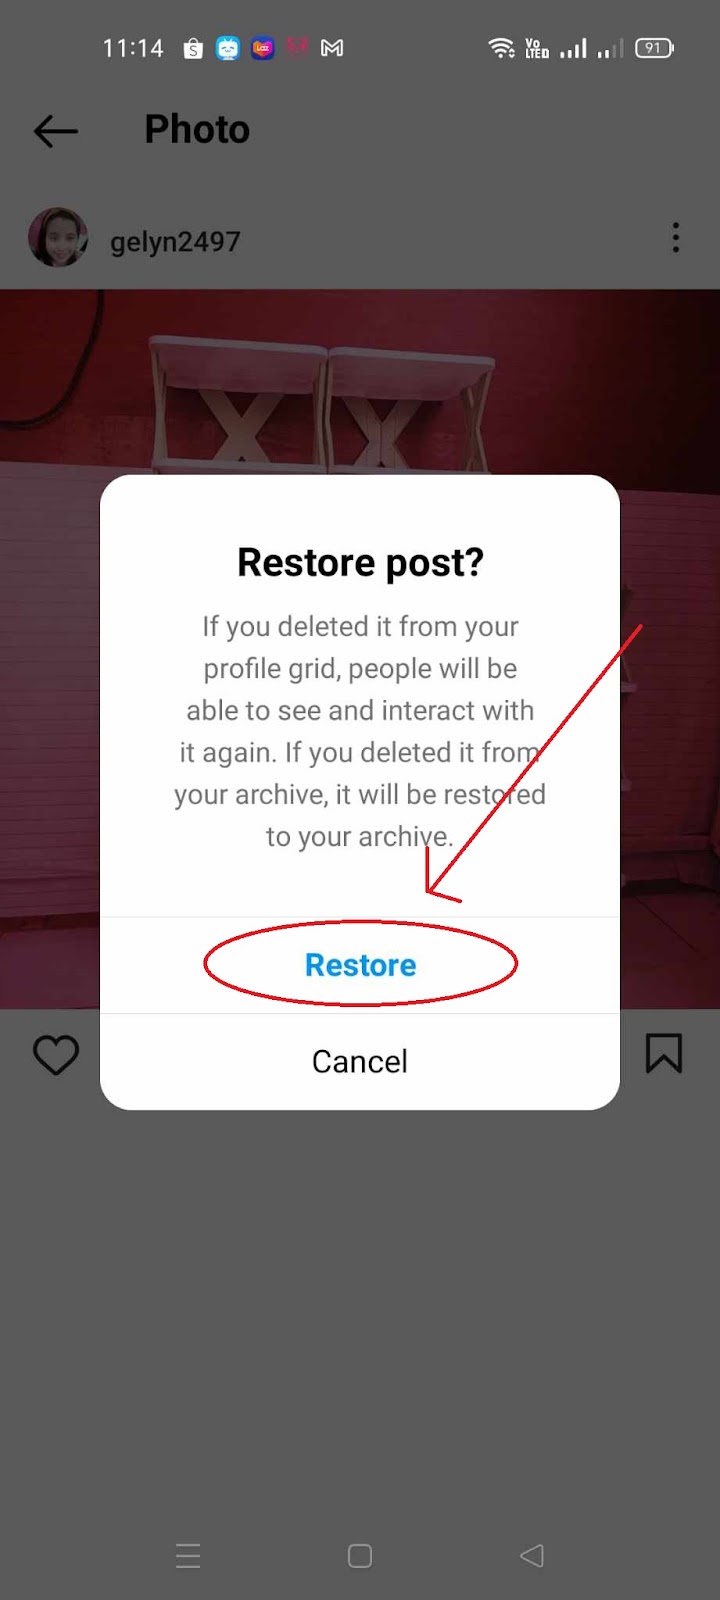 How to Rearrange Photos on Instagram Post - Confirm Restore